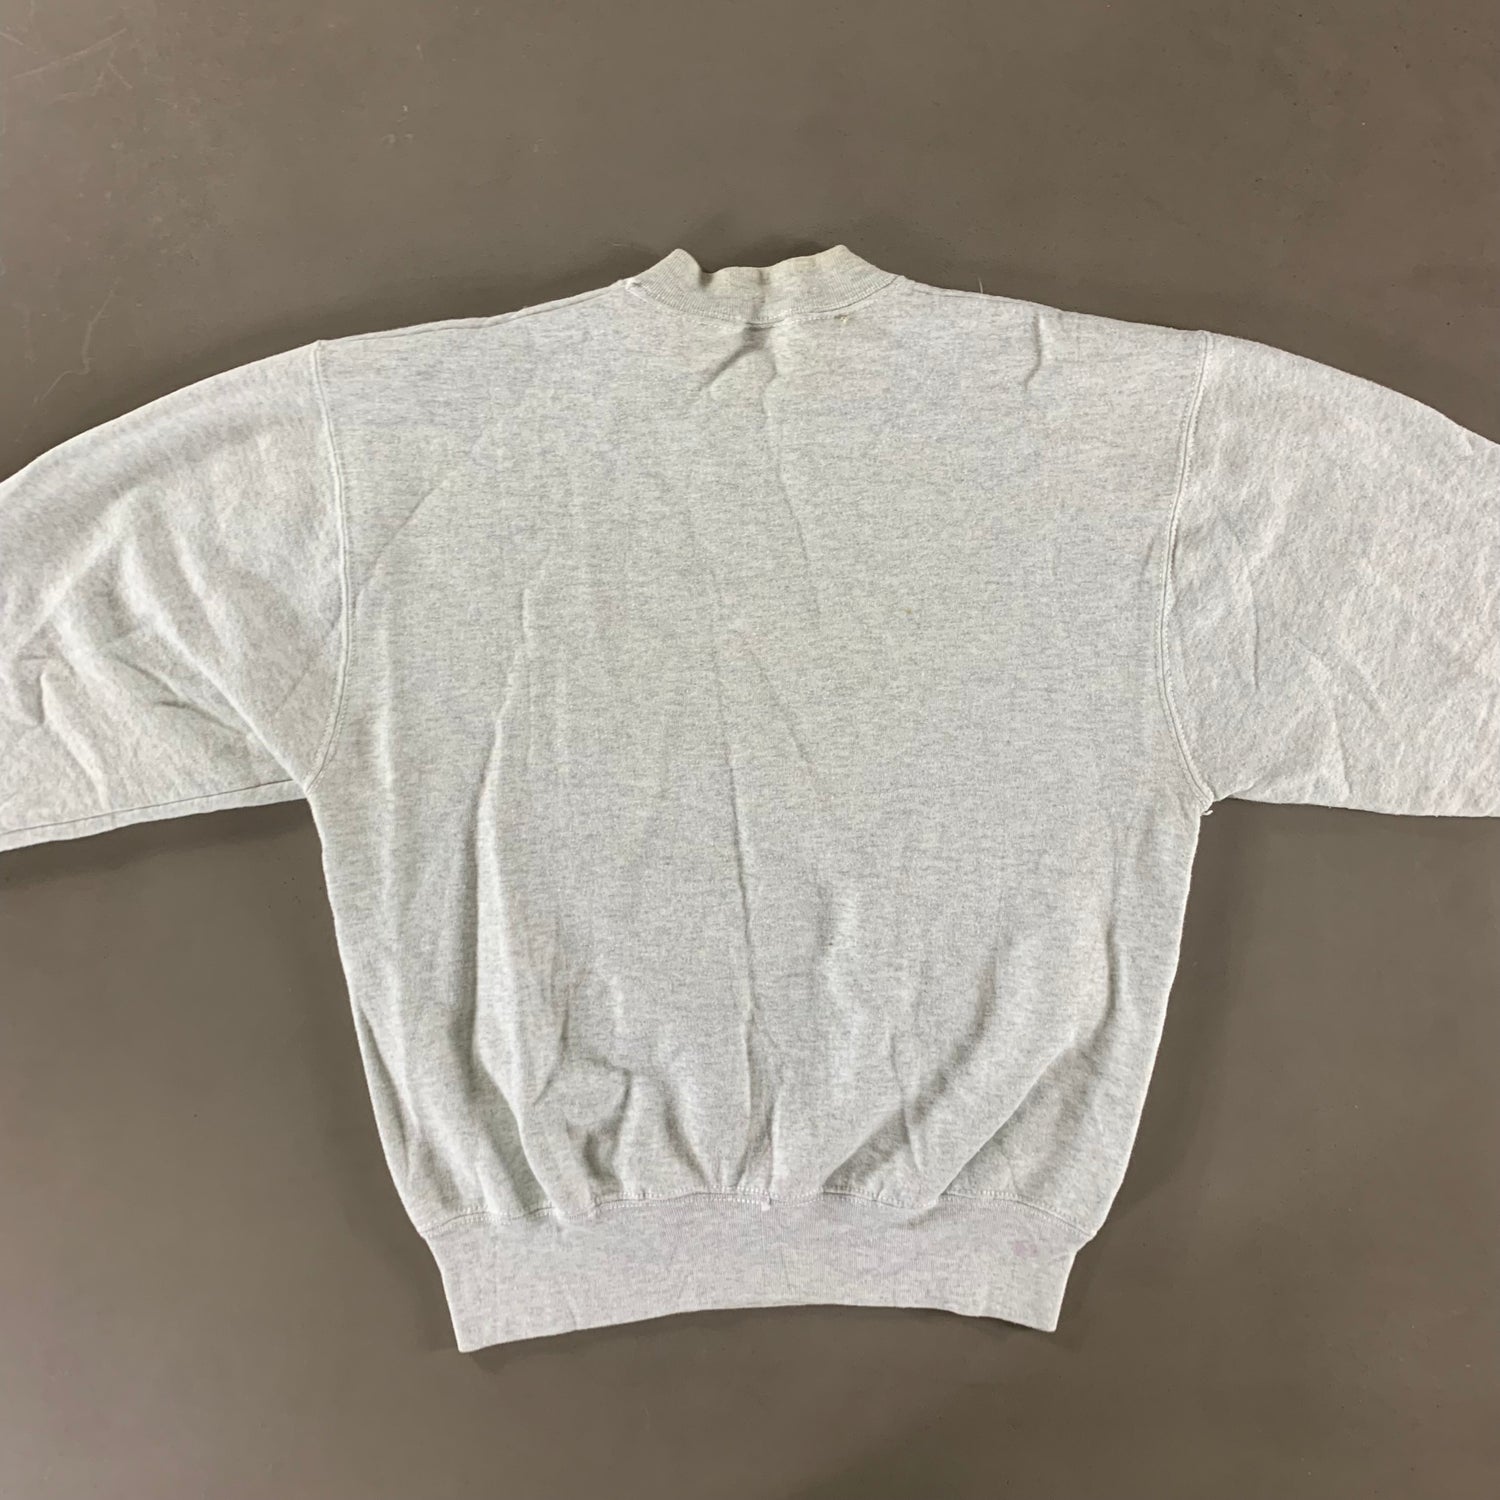 Vintage 1990s University of Michigan Sweatshirt size Medium